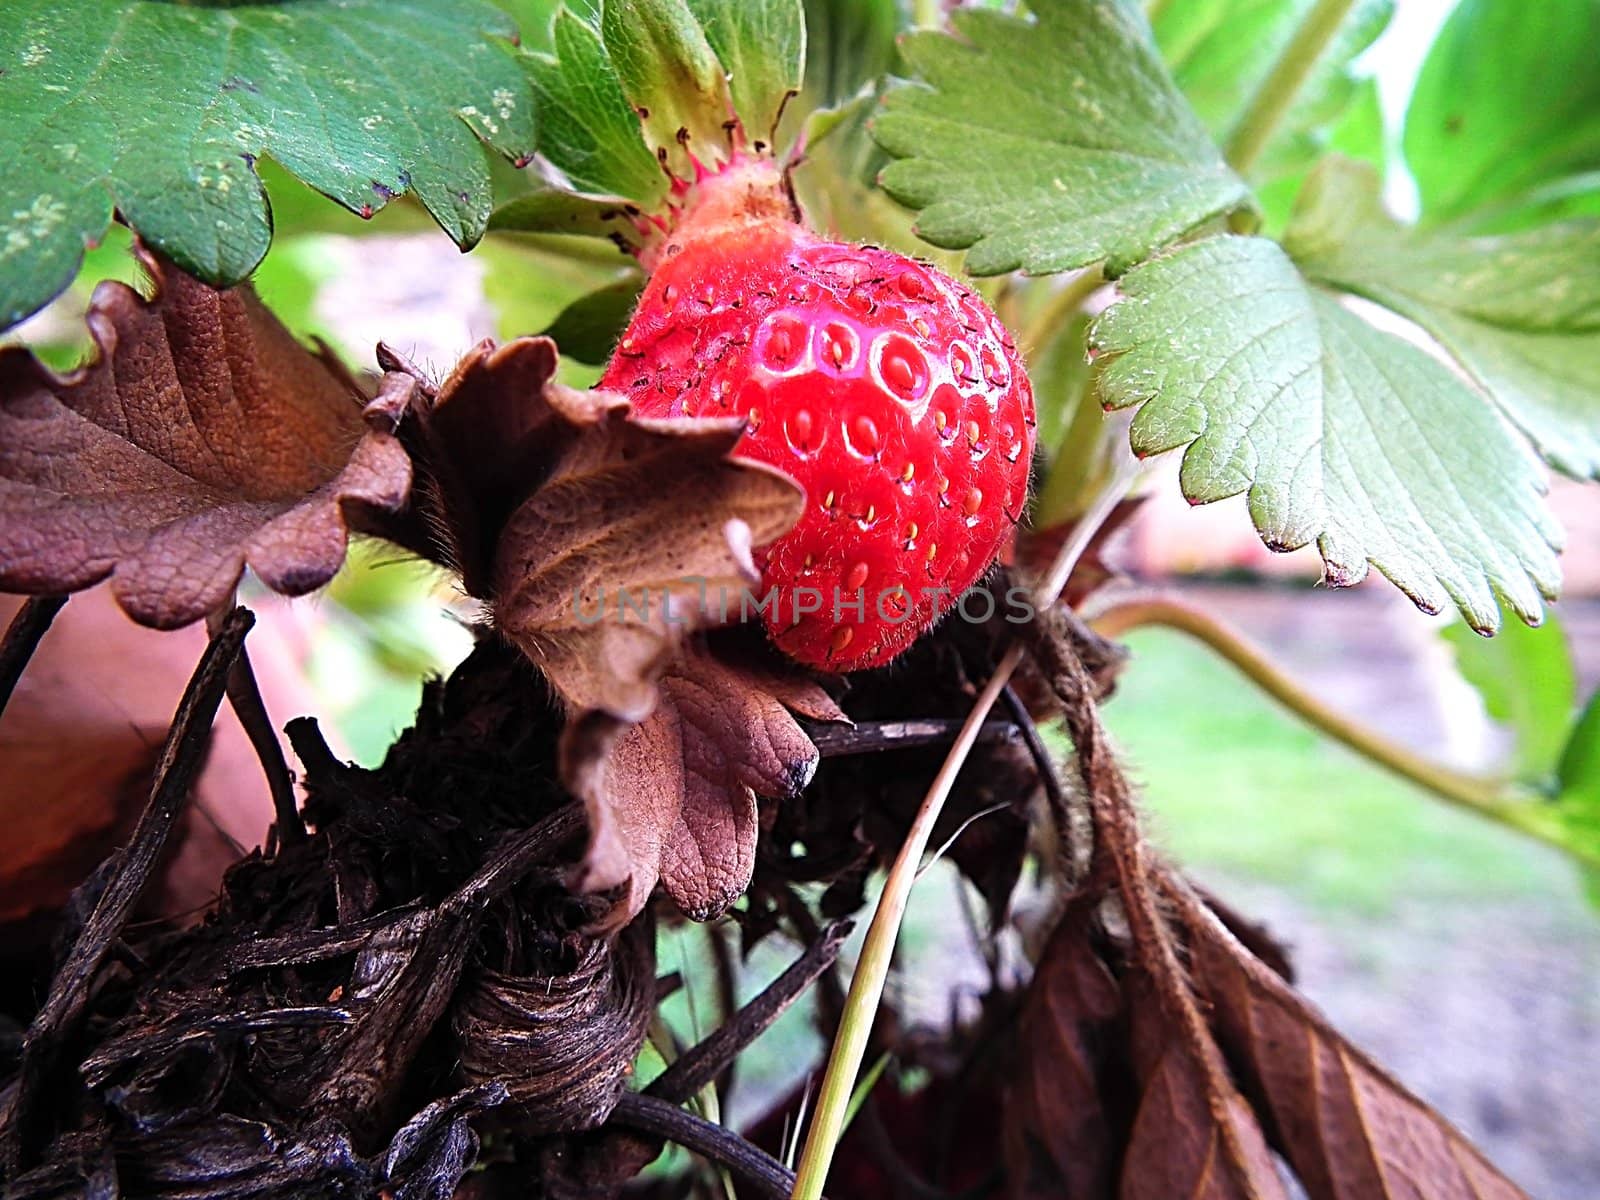 Strawberry of my garden